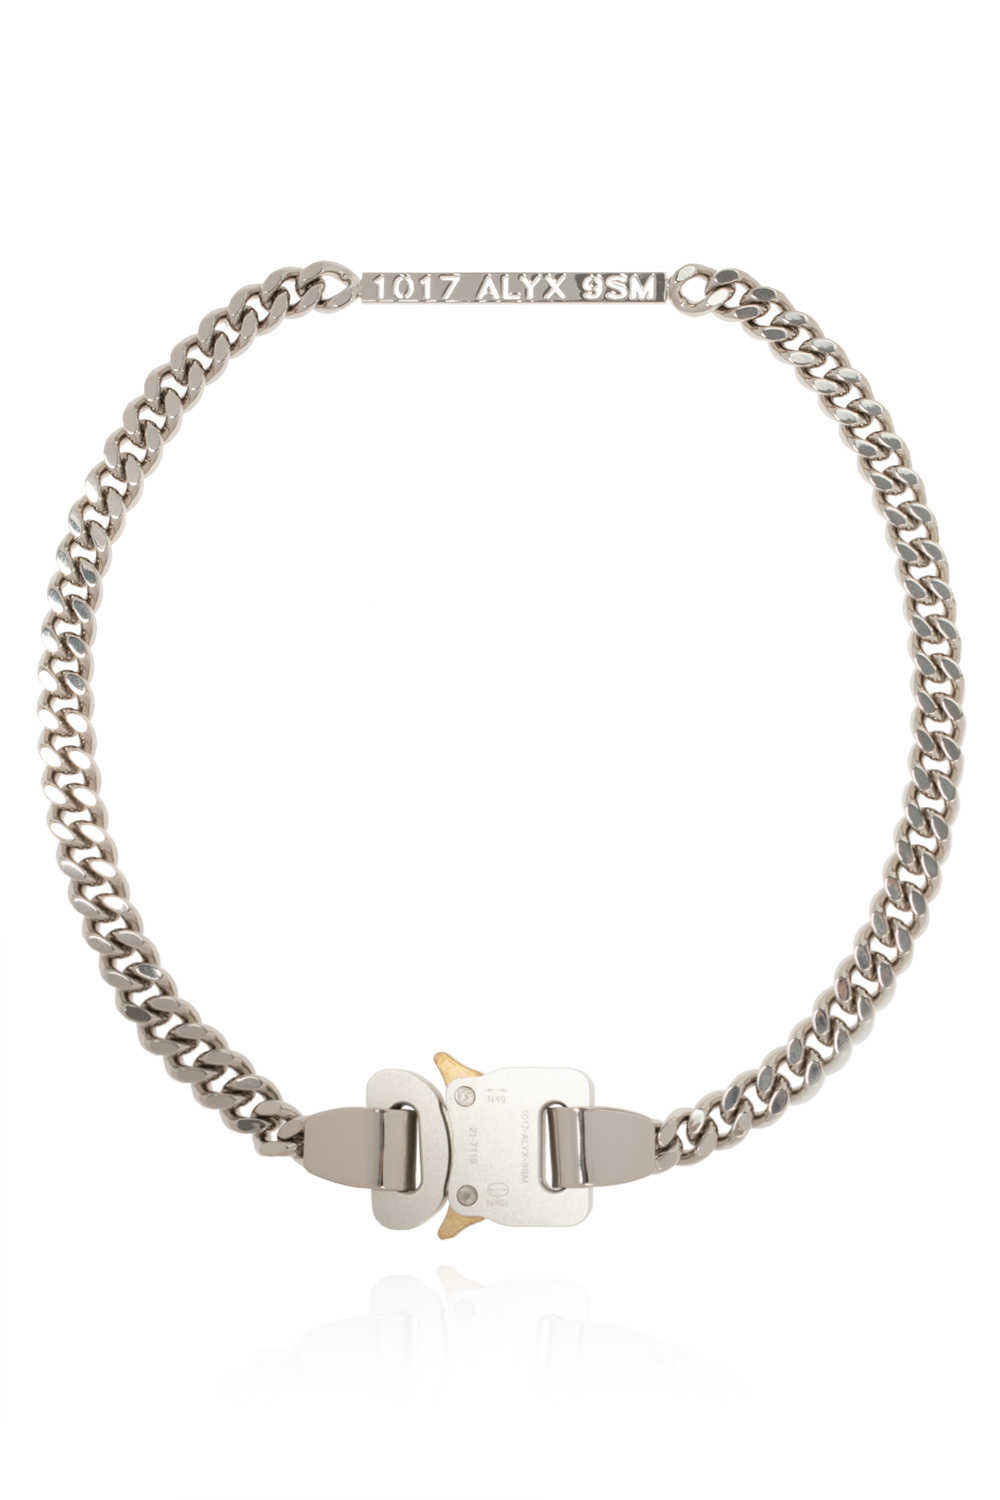 1017 ALYX 9SM Chain necklace